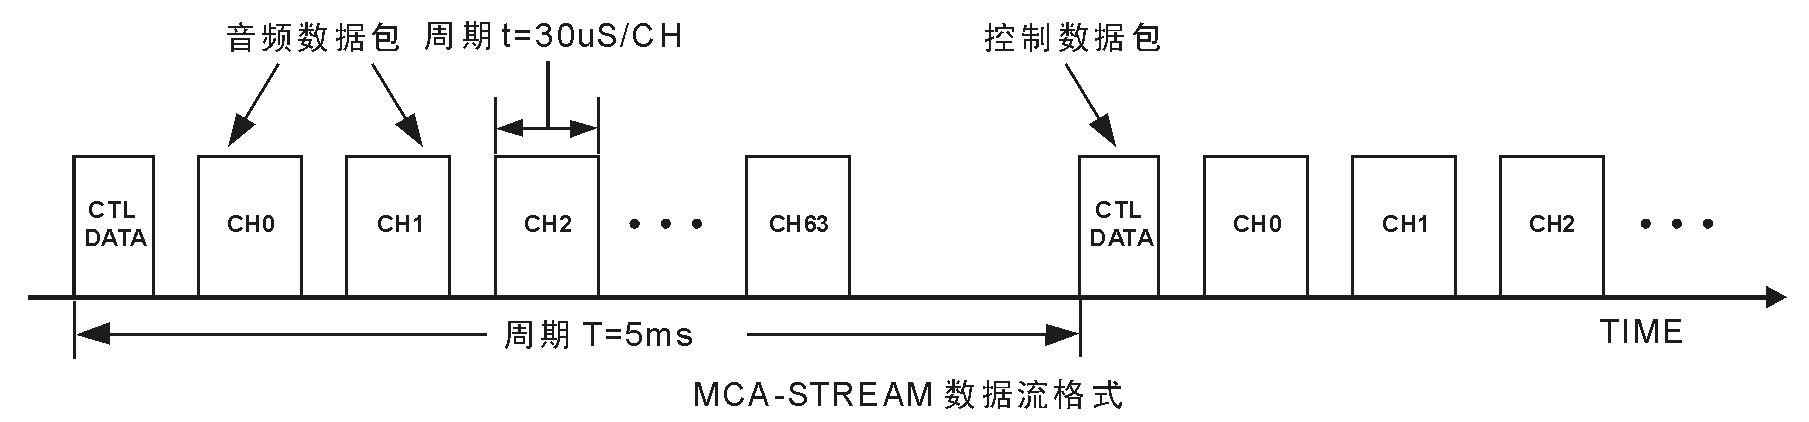 HCS-4100全數字會議系統